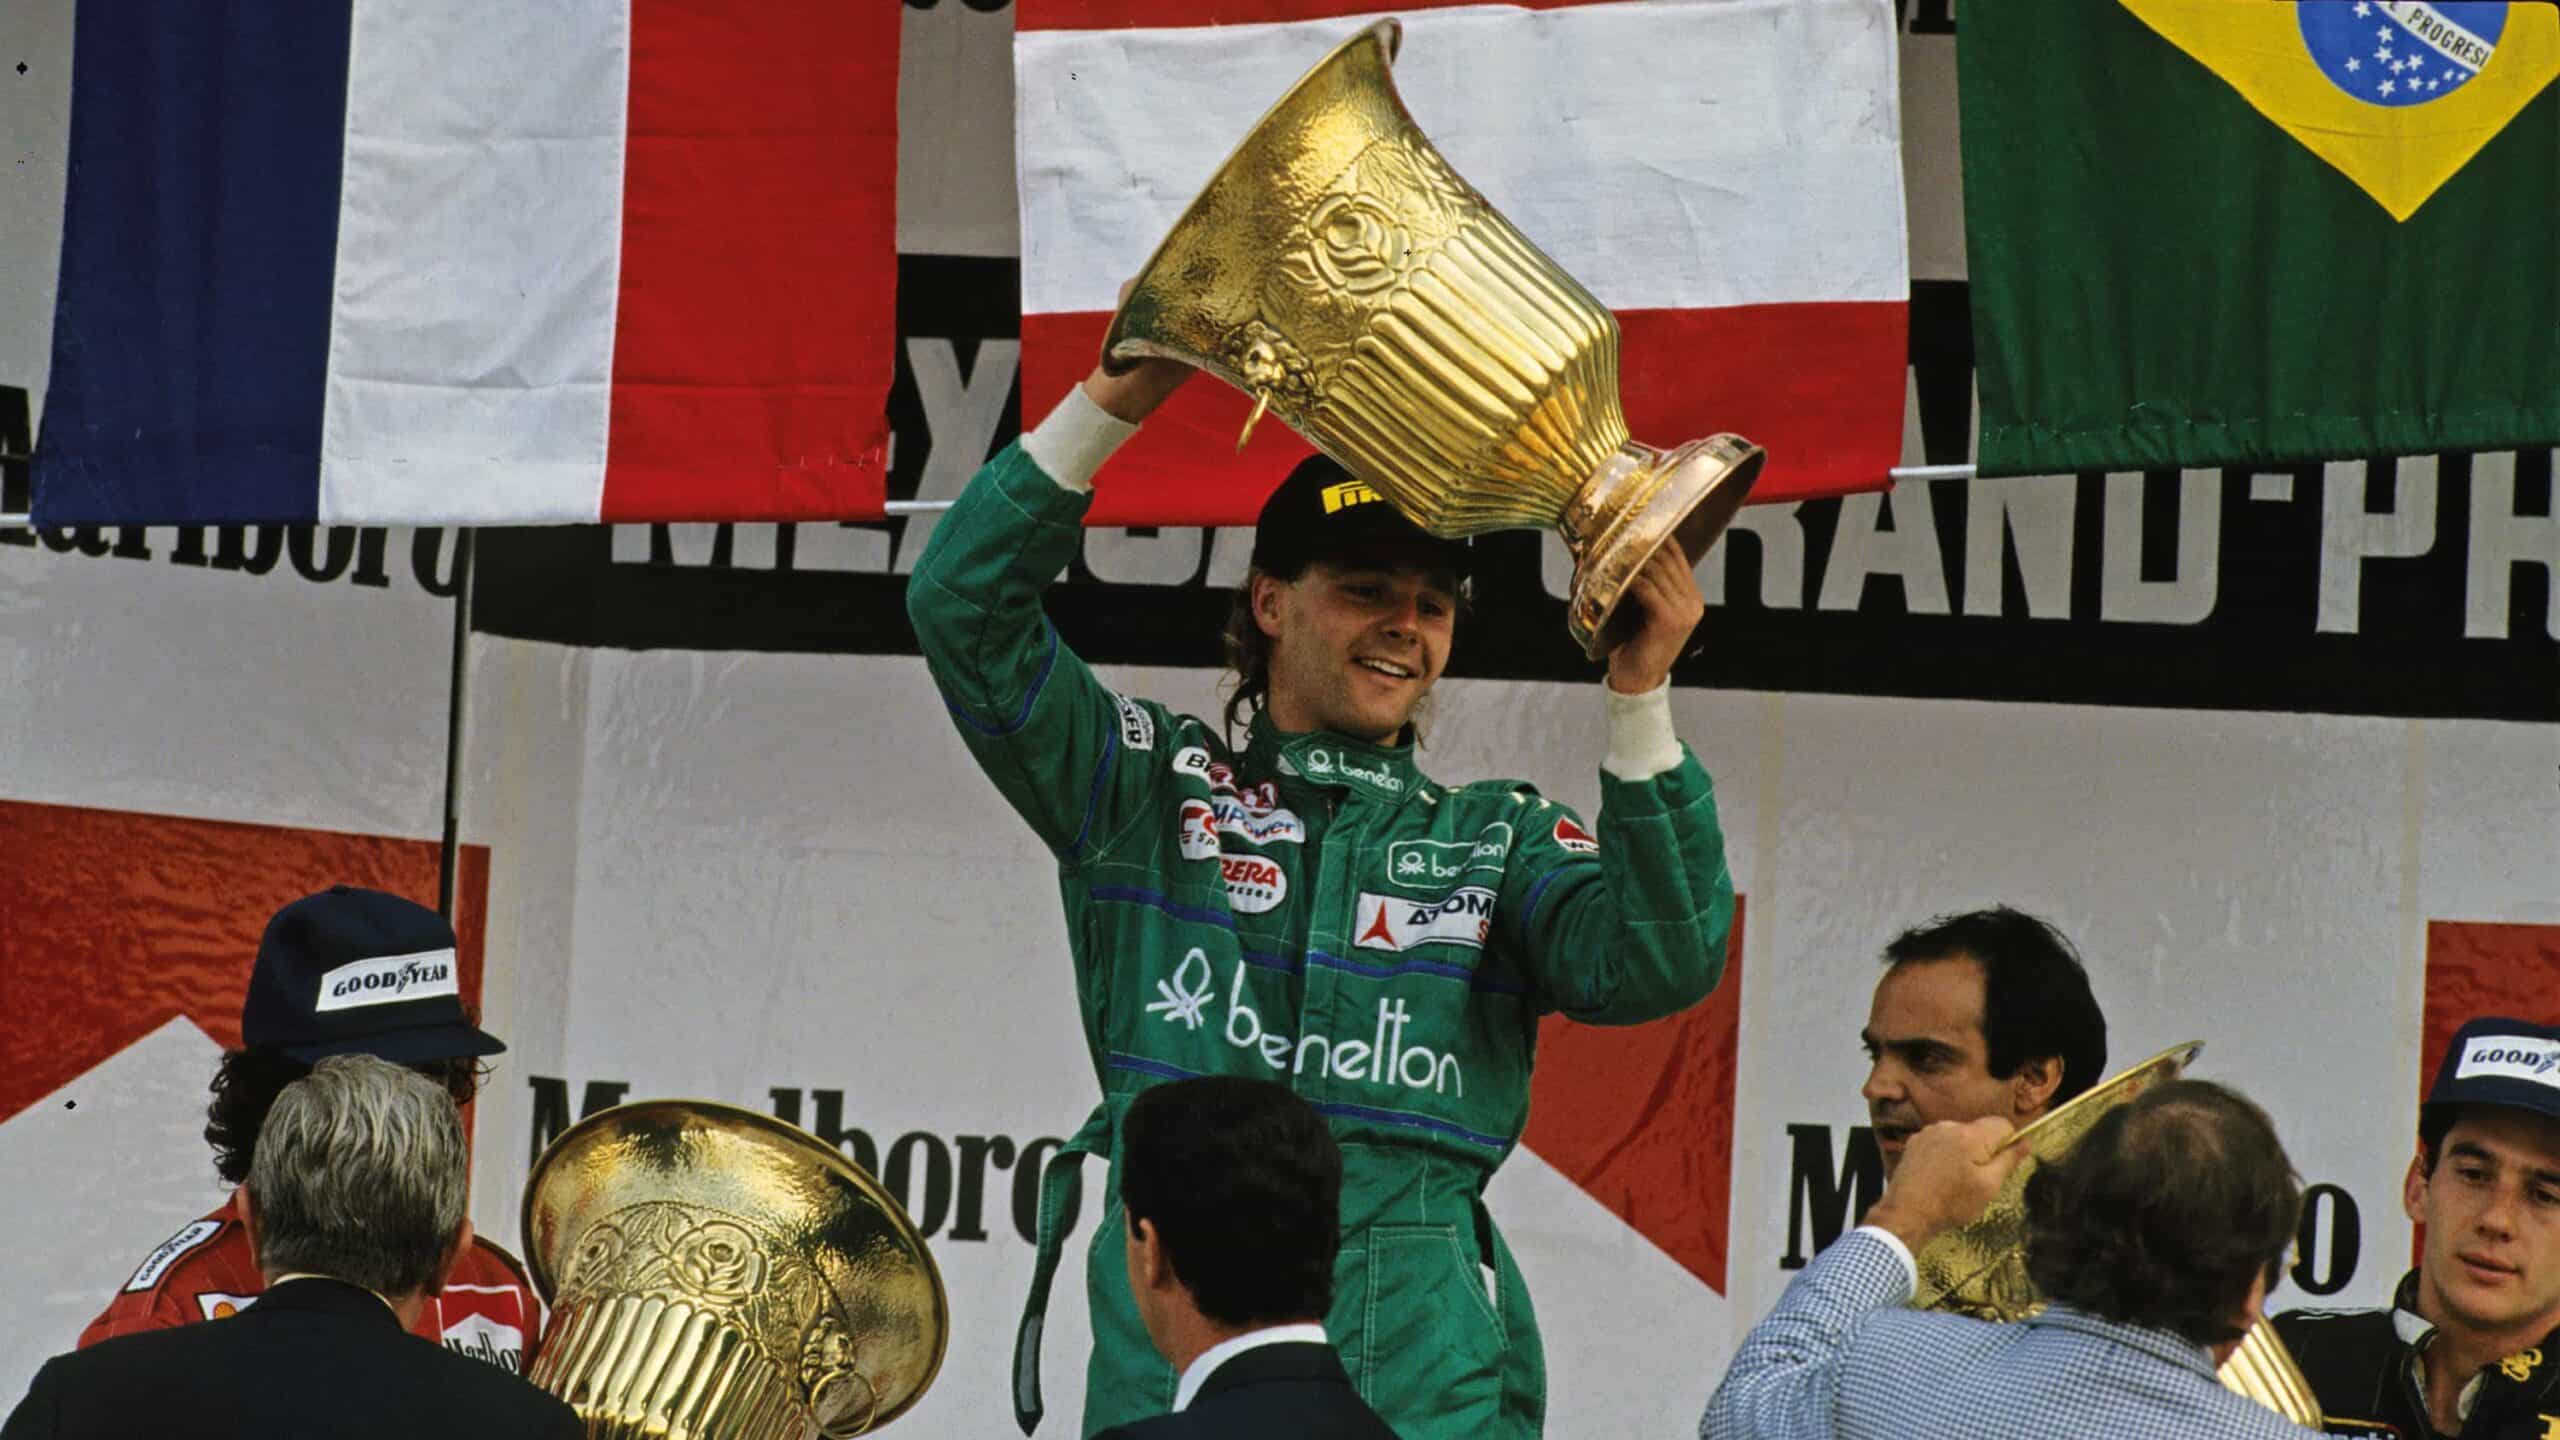 Benetton victory